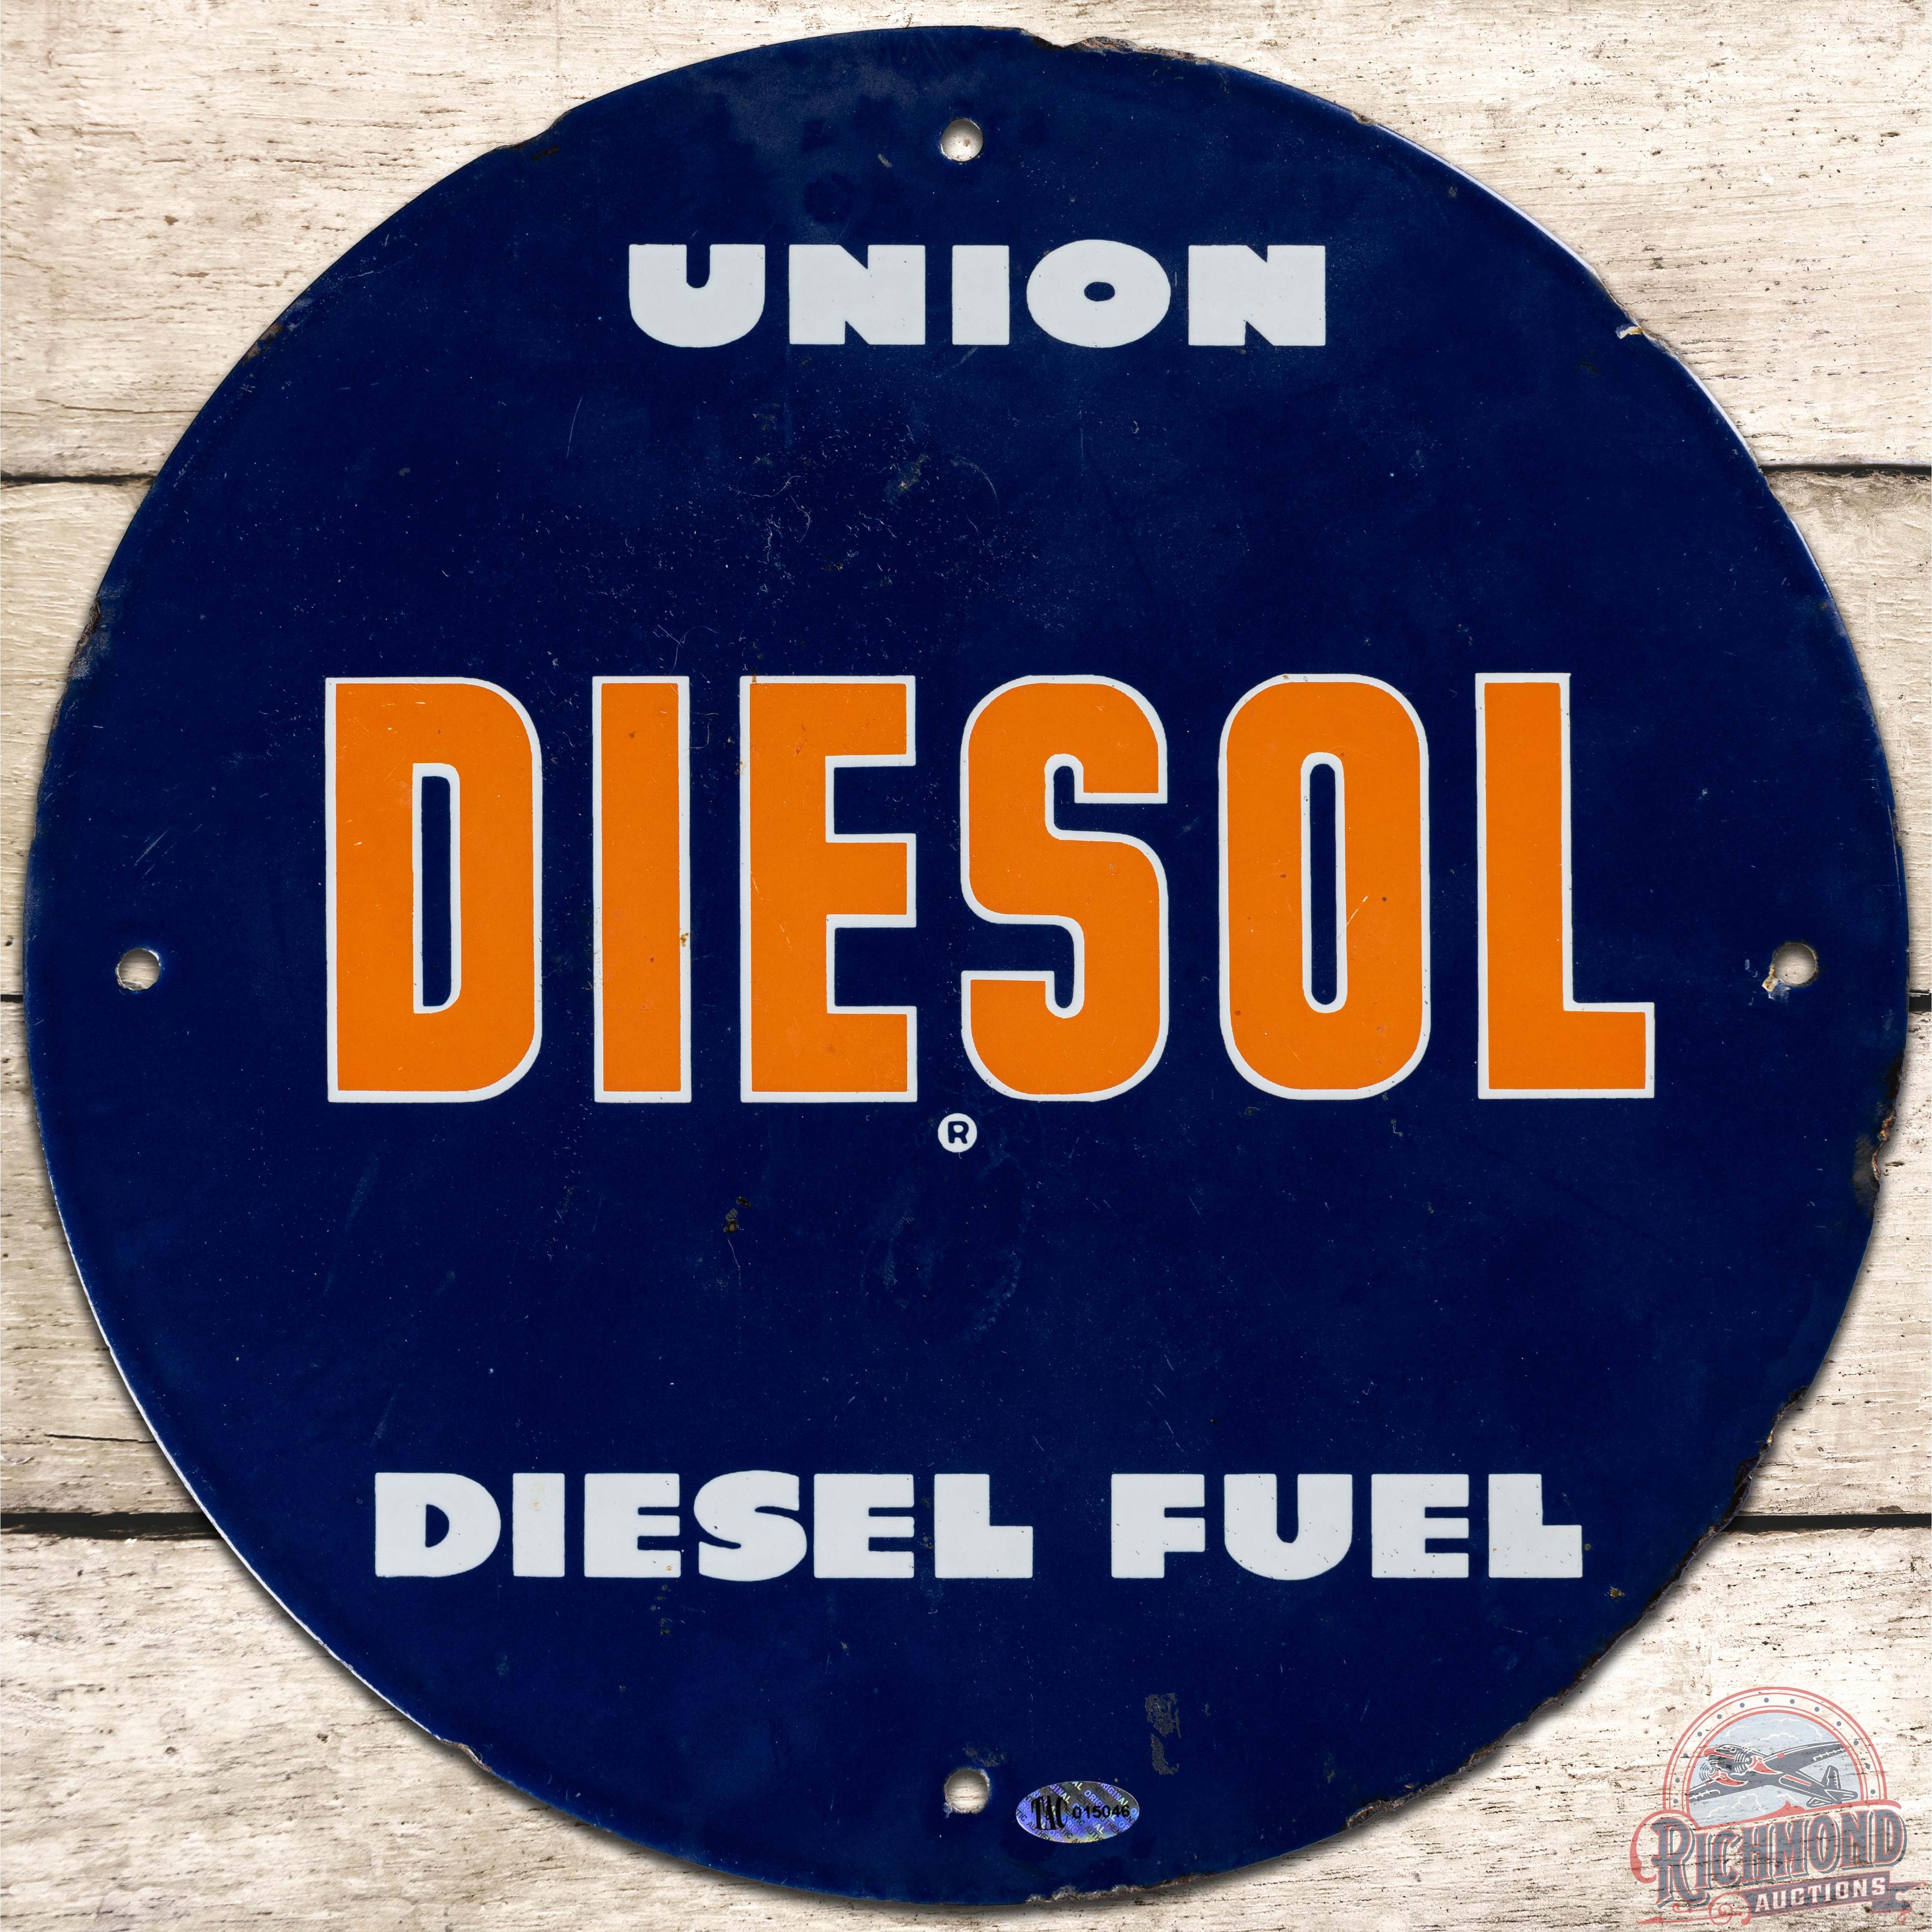 Union 76 Diesol Diesel Fuel SS Porcelain Gas Pump Plate Sign